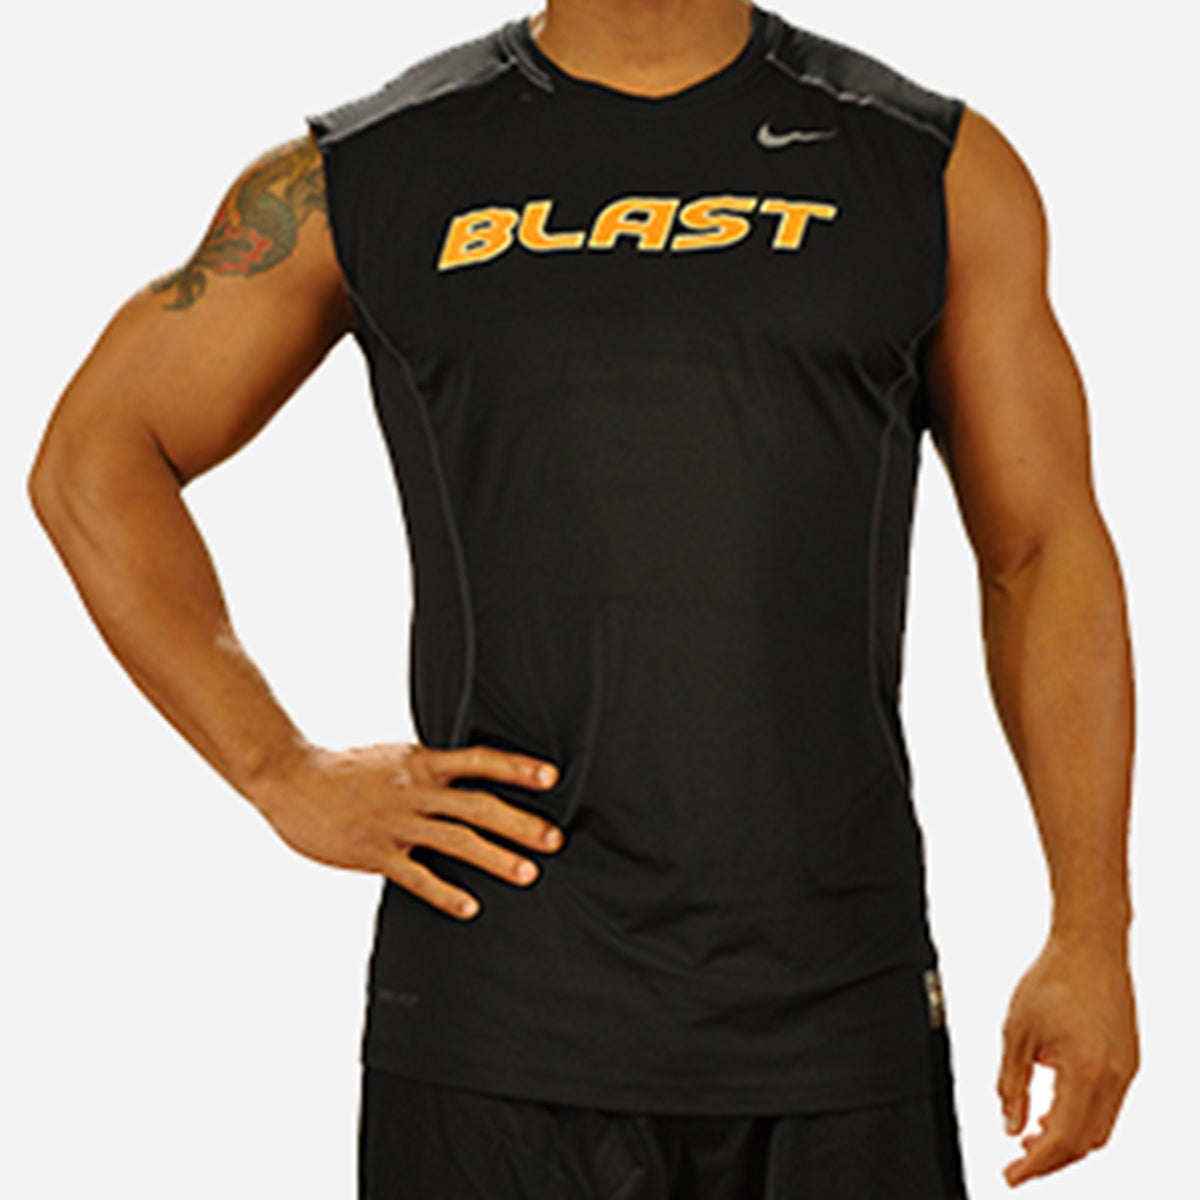 MOSSA Blast Men's Nike Pro Combat Fitted